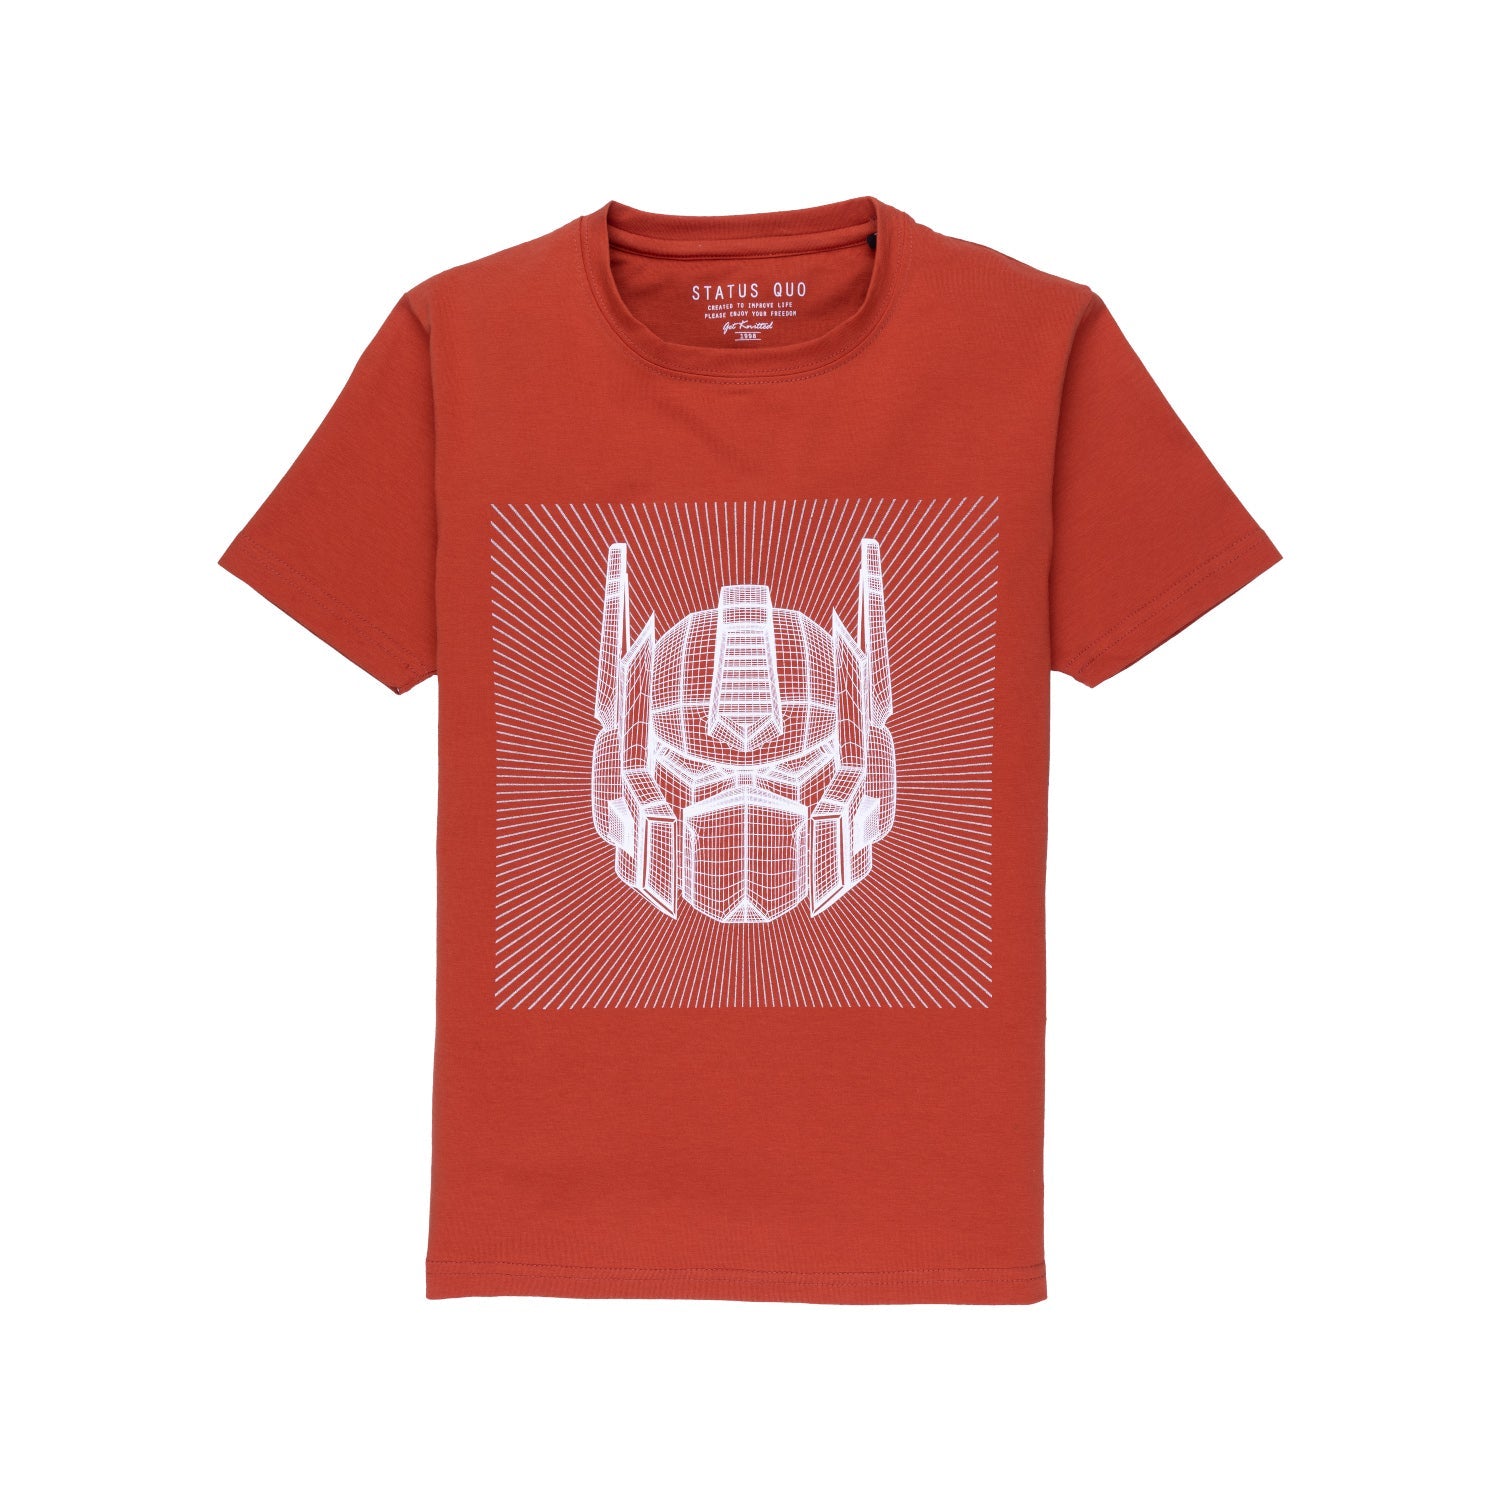 Status Quo |Kids Printed Transformers T-shirt - 4, 6, 8, 10, 12, 14, 16